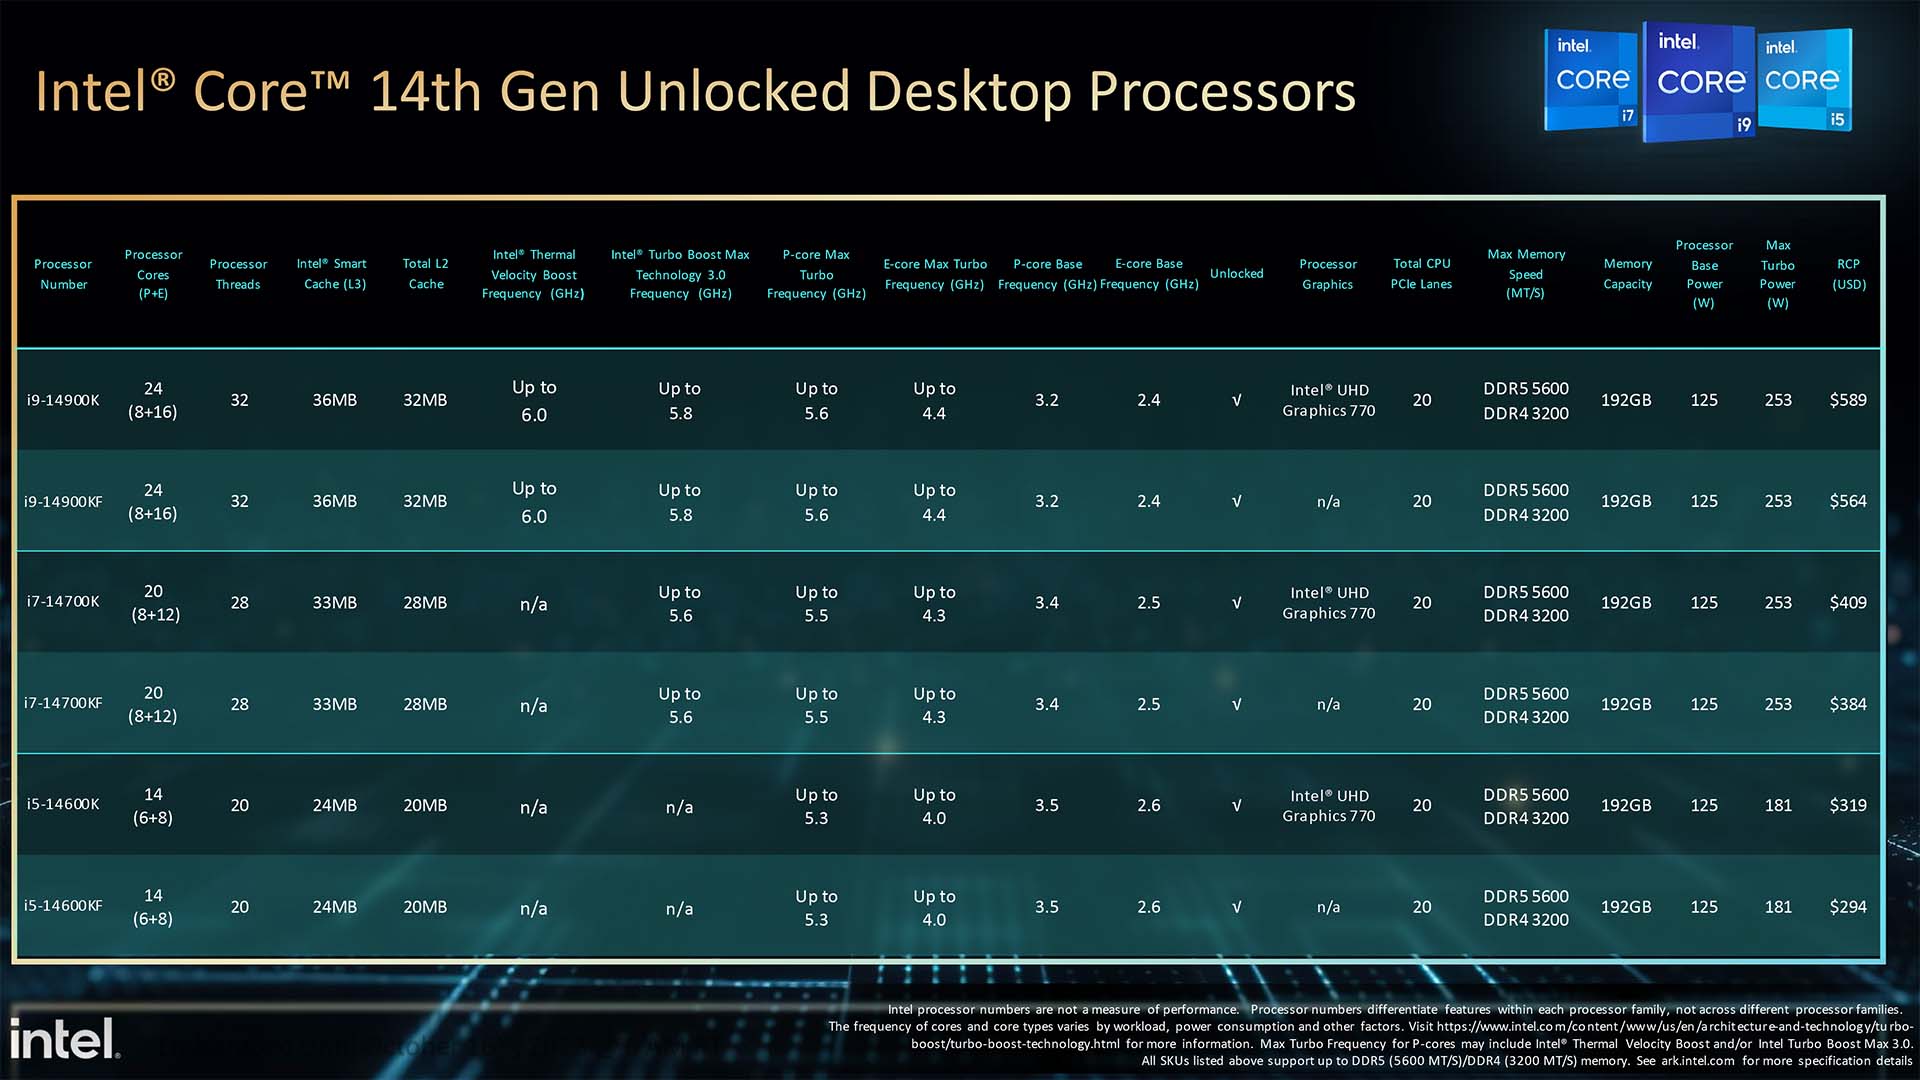 Intel Core 14th Gen CPU specs and price